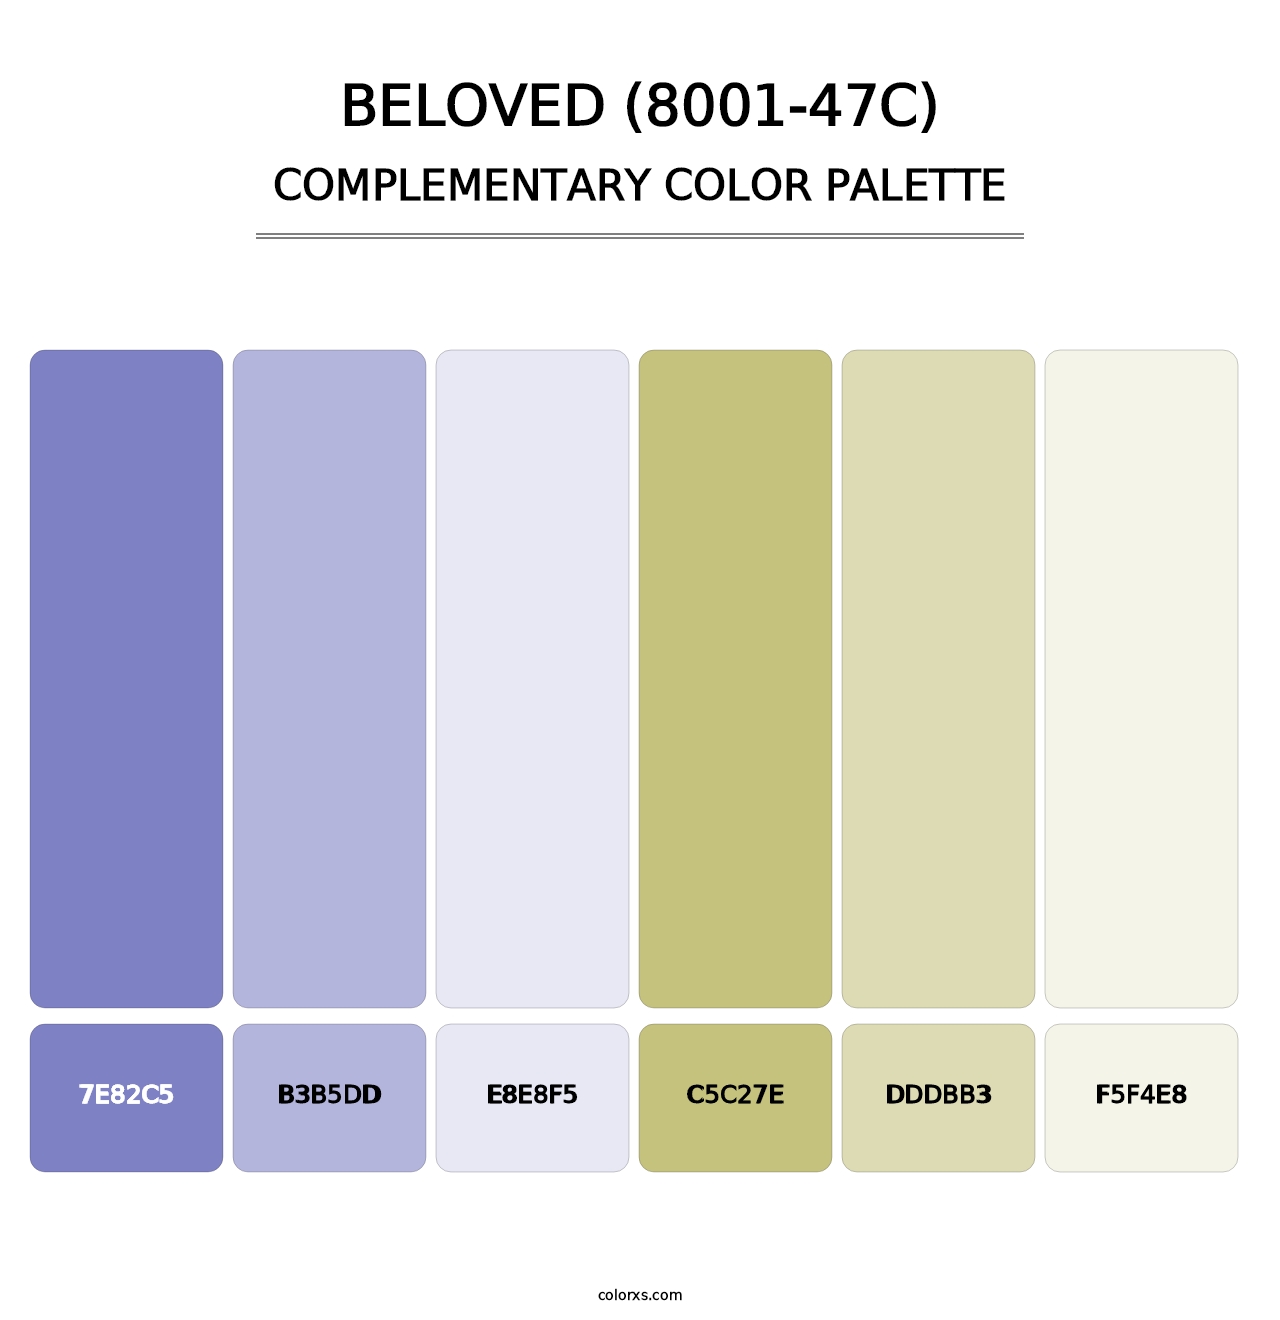 Beloved (8001-47C) - Complementary Color Palette